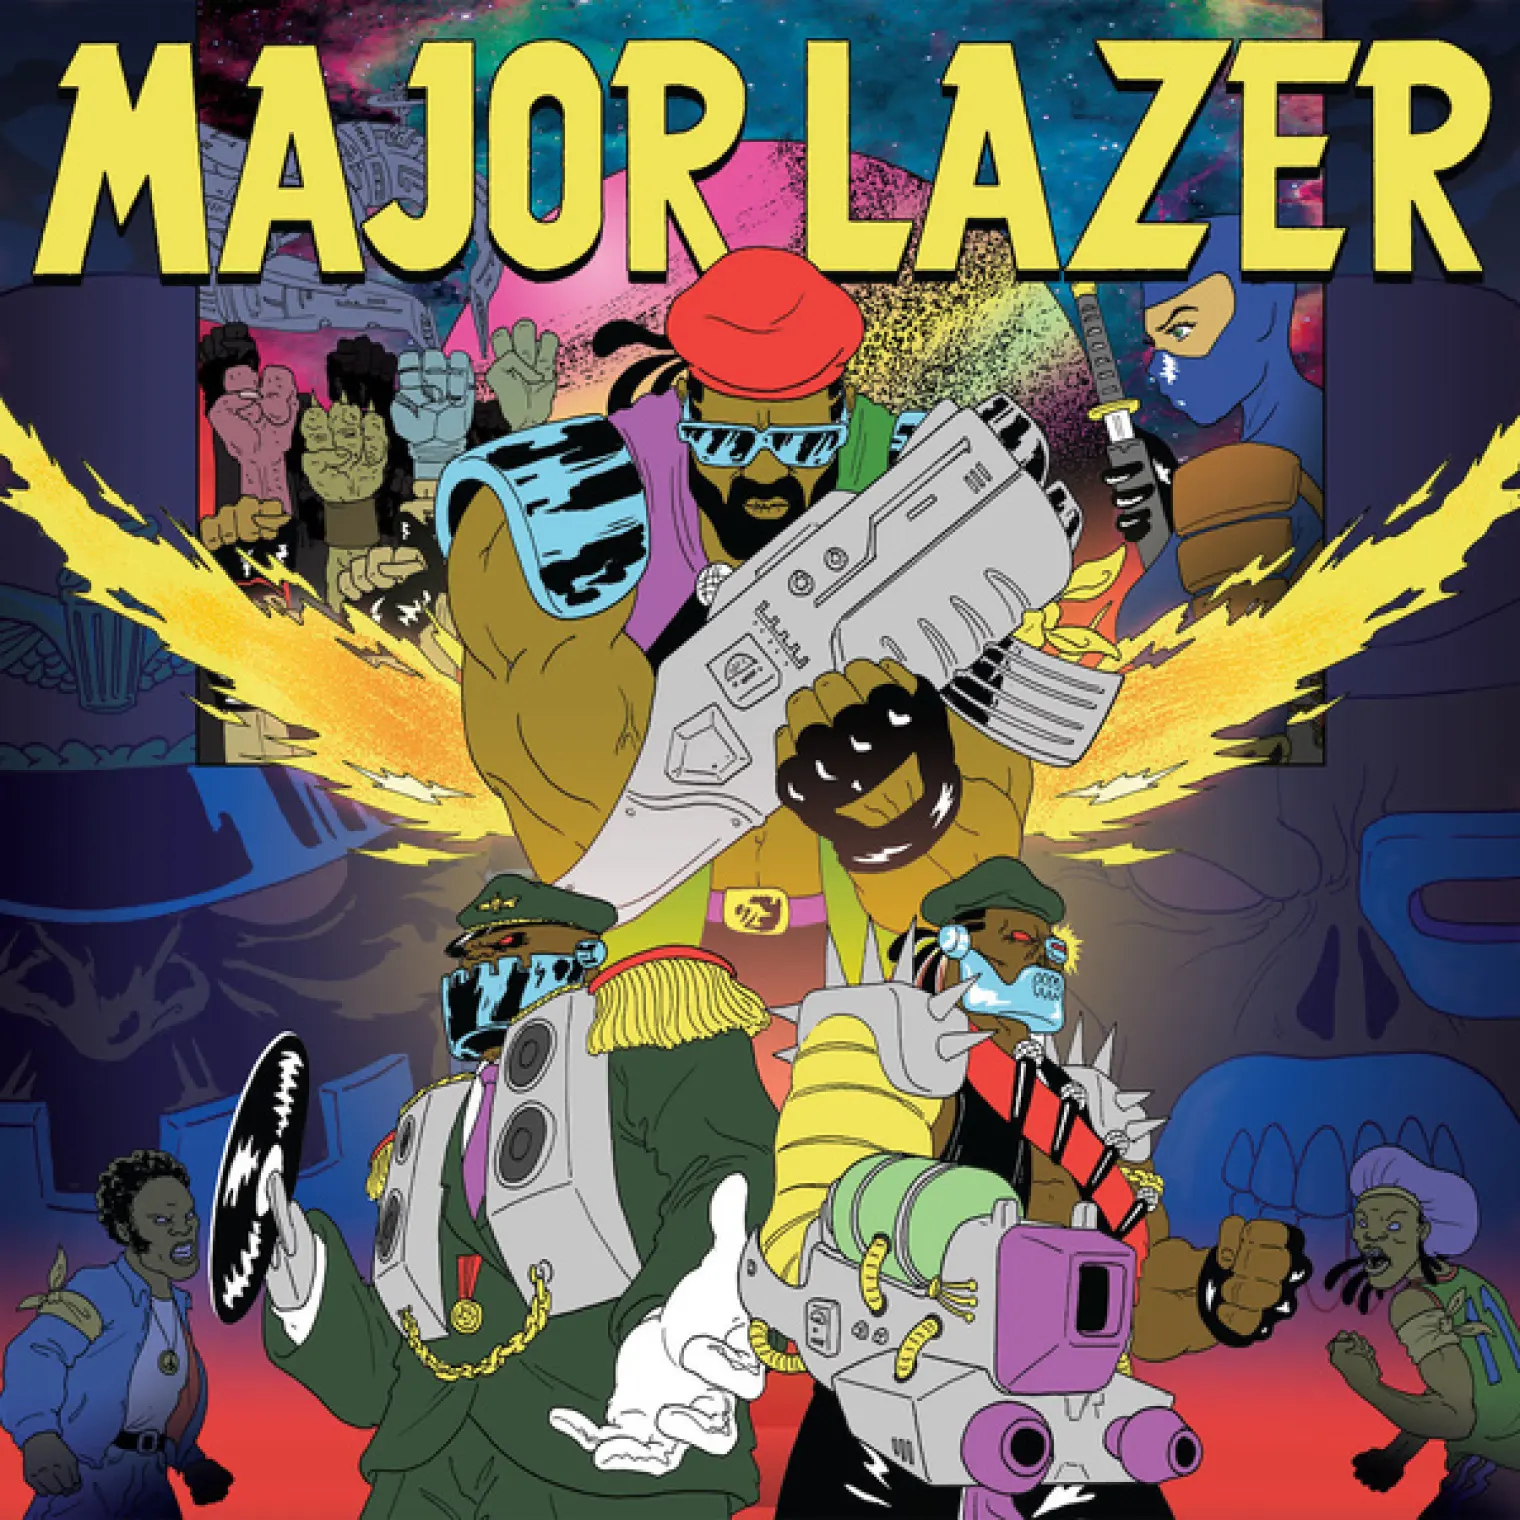 Free The Universe -  Major Lazer 